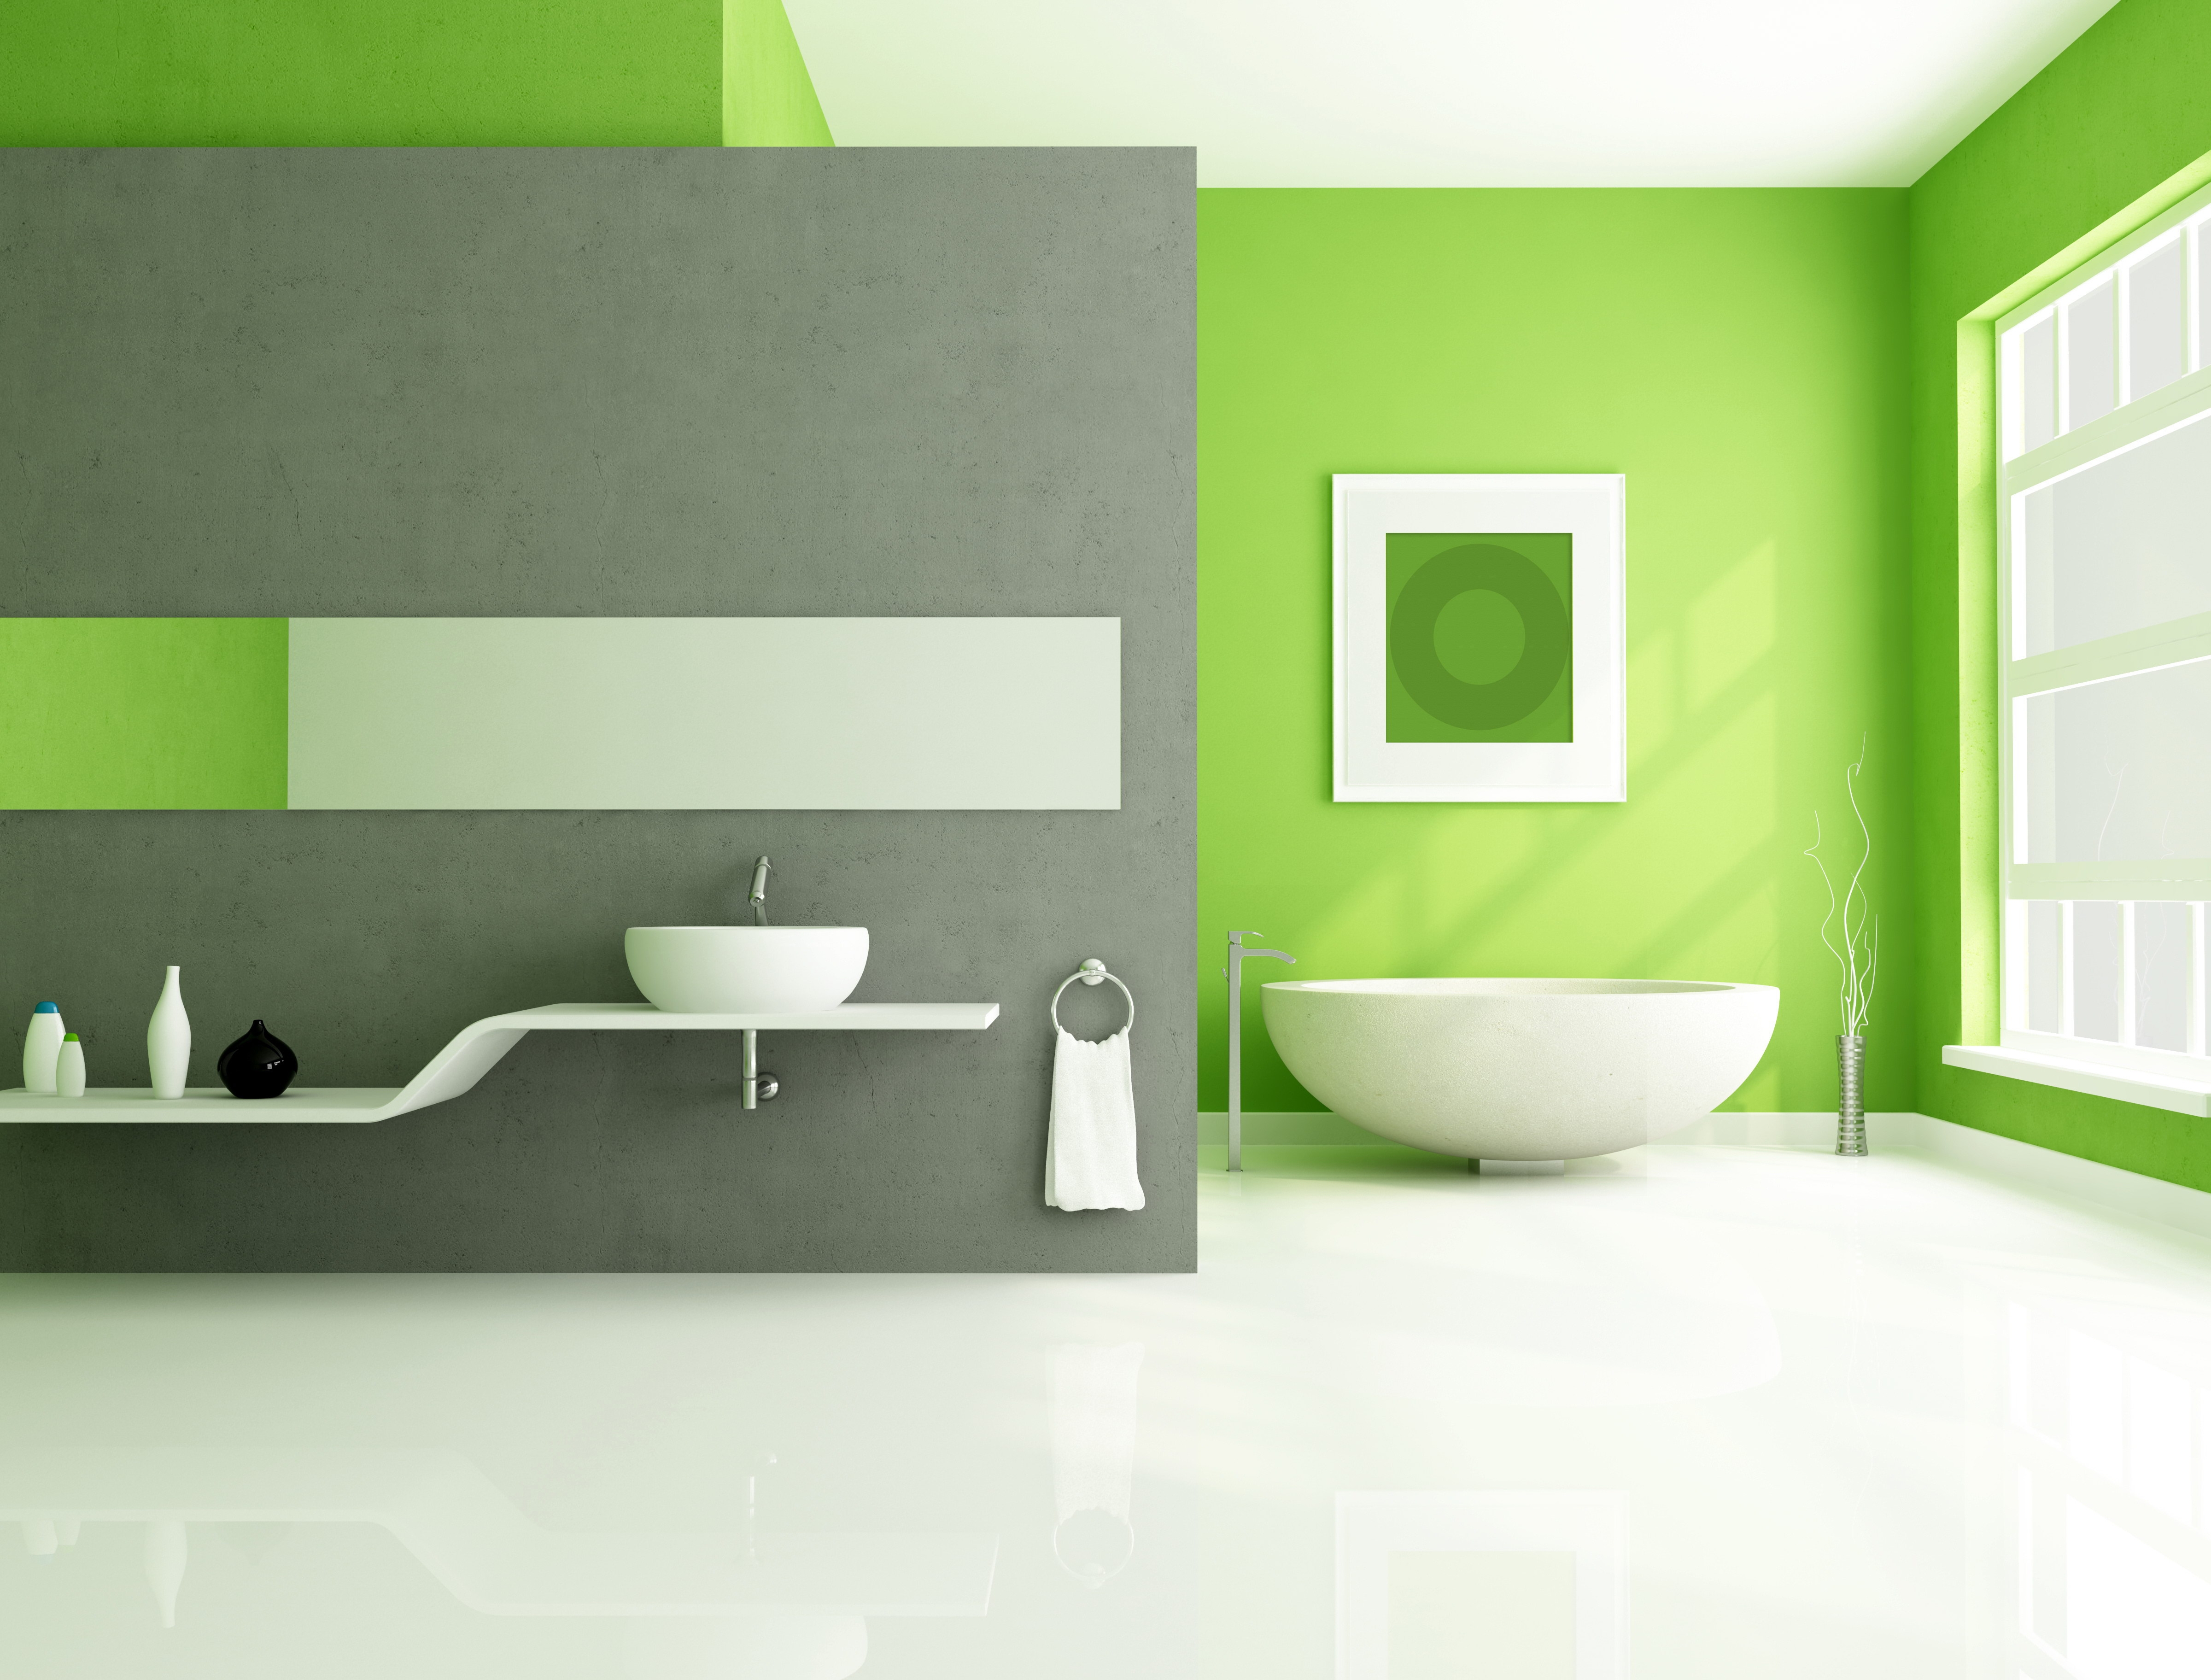 design, miscellanea, miscellaneous, graphics, bathroom